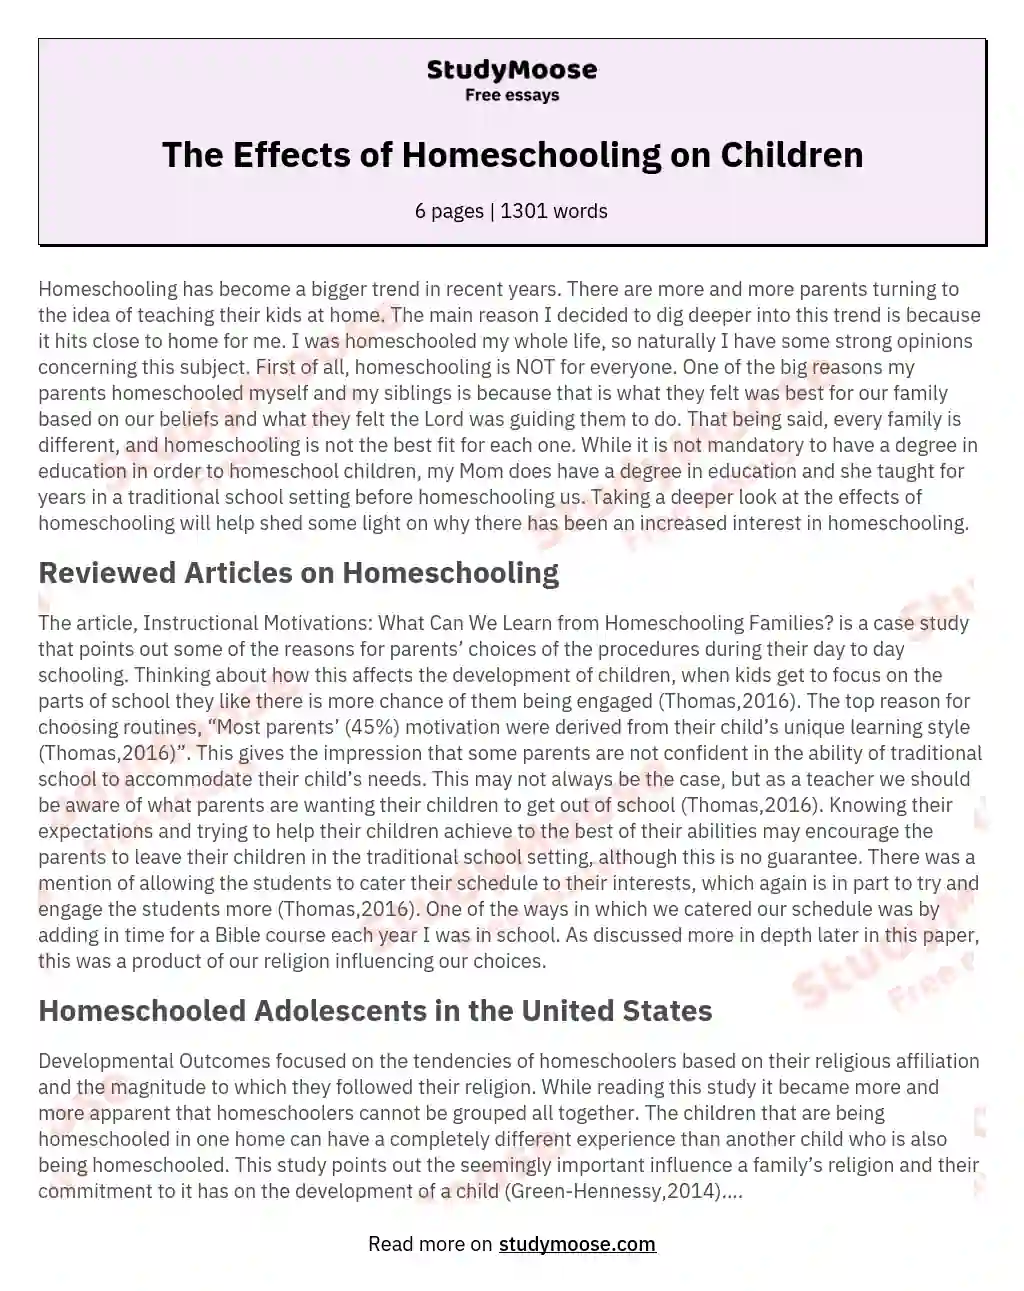 essay on homeschooling